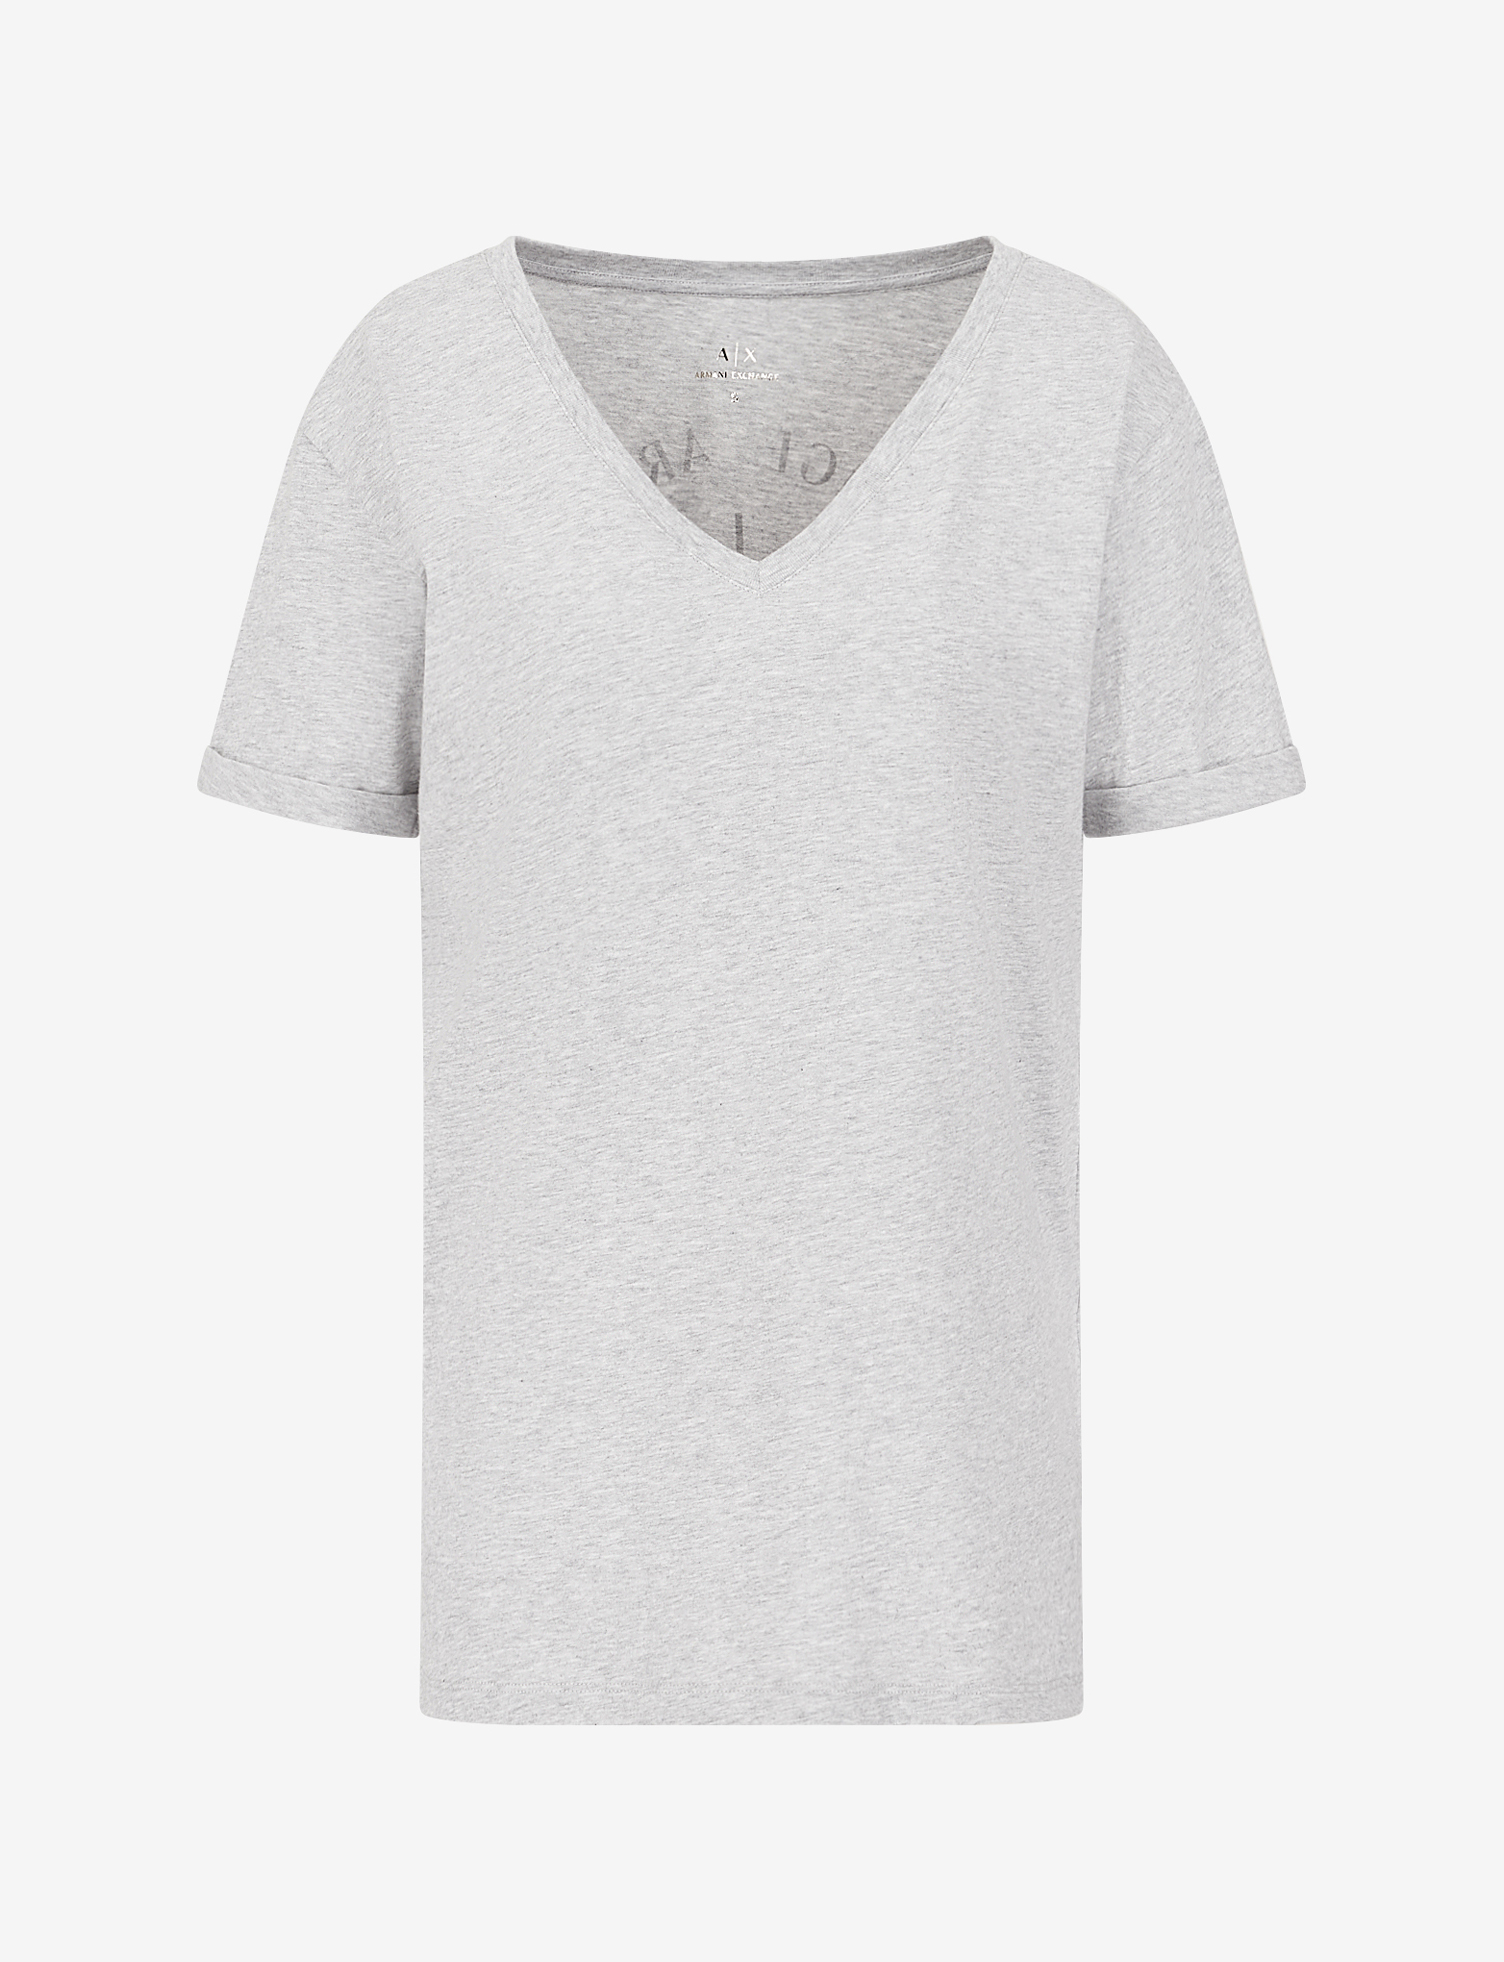 ARMANI EXCHANGE  6KYTGG YJ3RZ Damen T-Shirt Grau Melange 3911